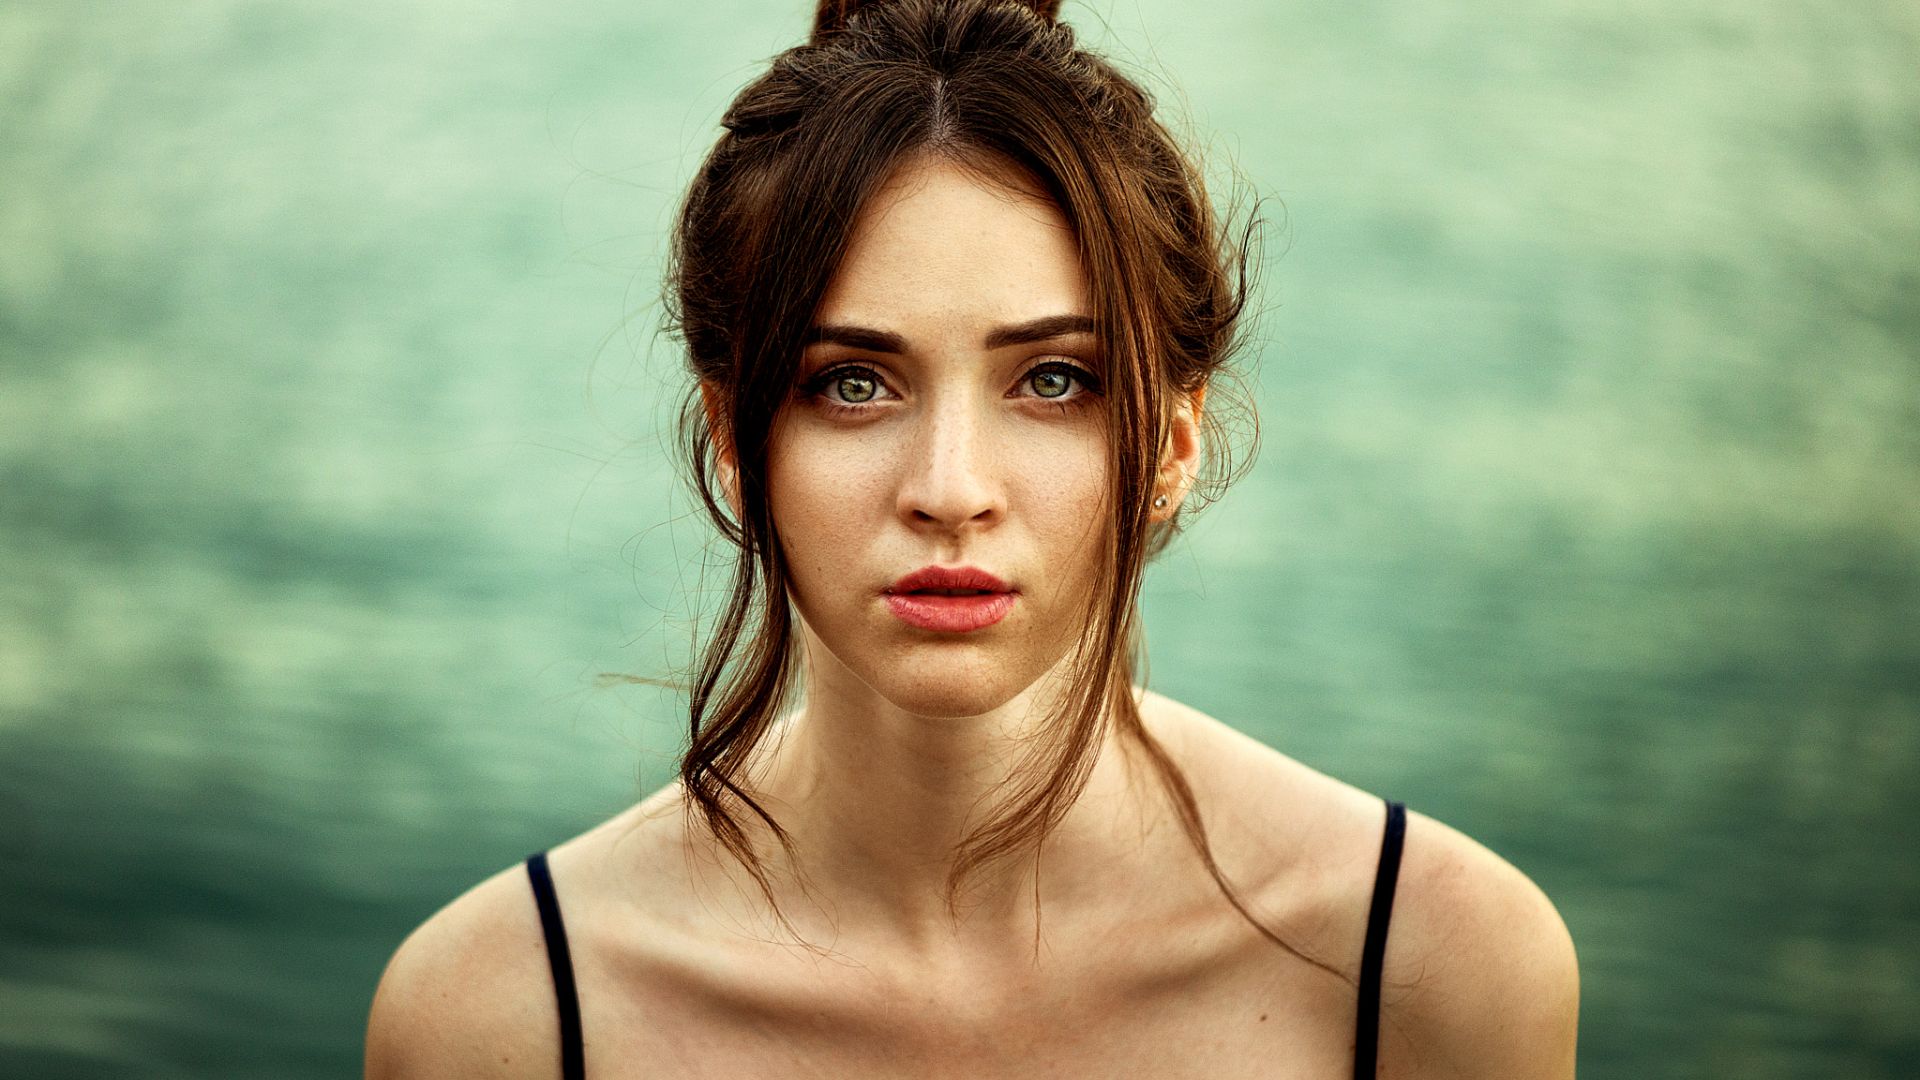 Wallpaper Face, girl model, brunette, beautiful, portrait